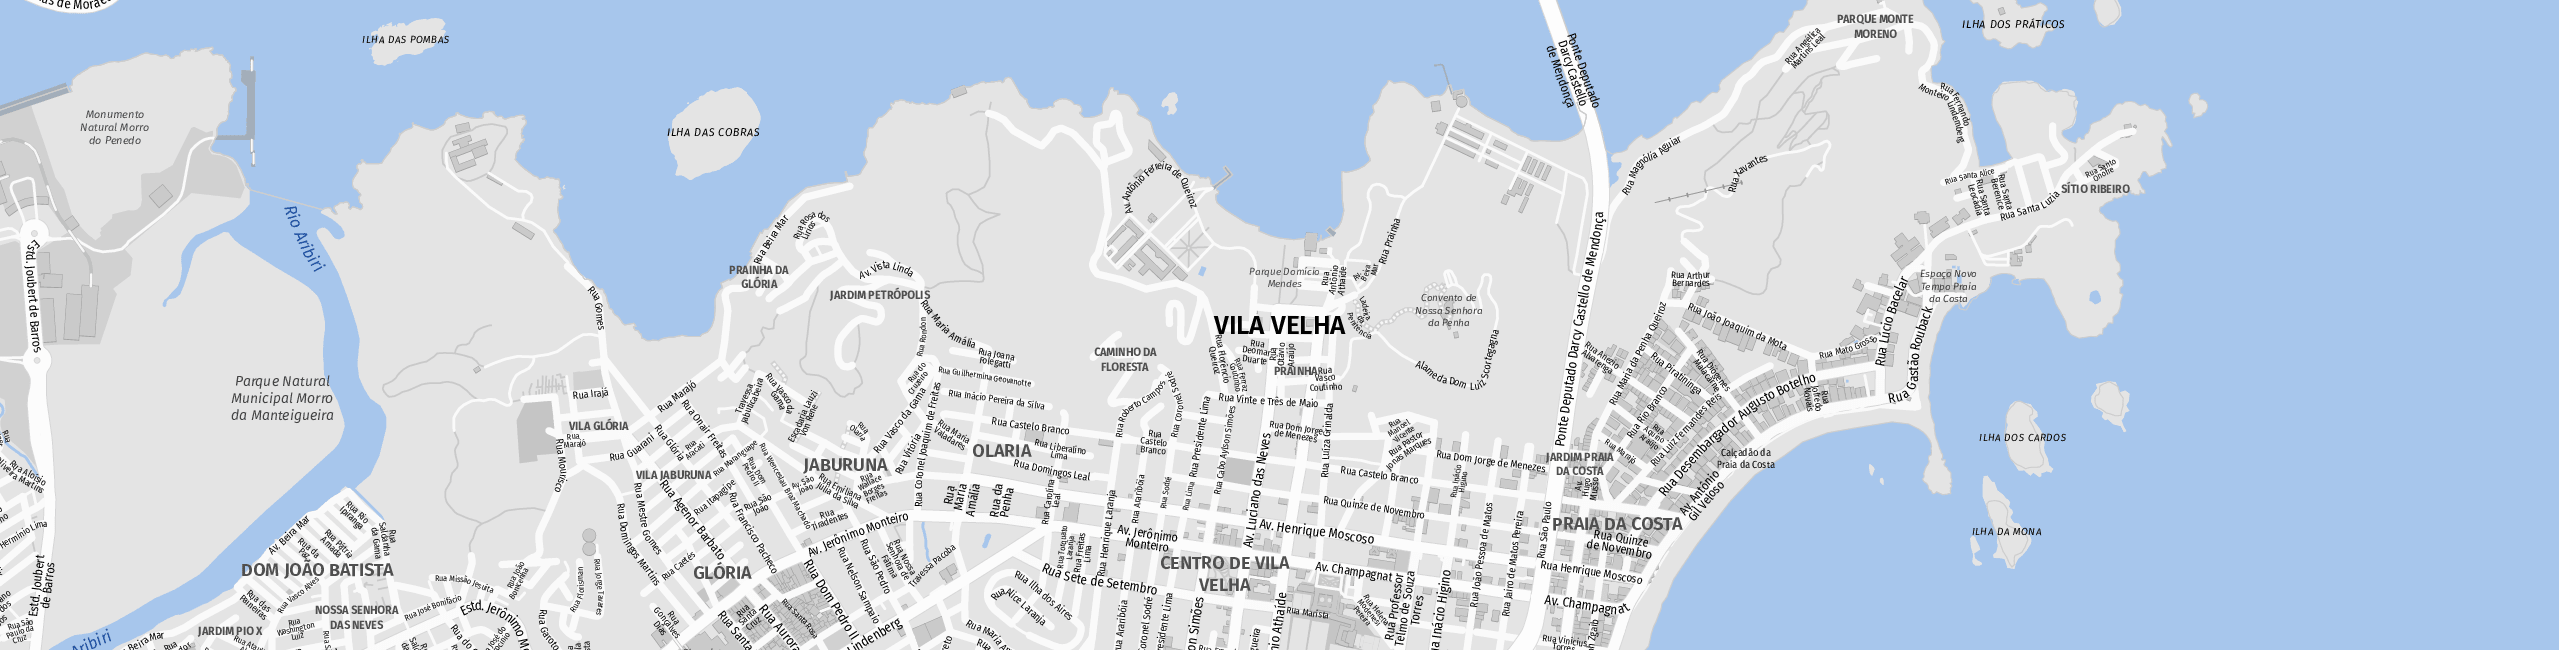 Stadtplan Vila Velha zum Downloaden.